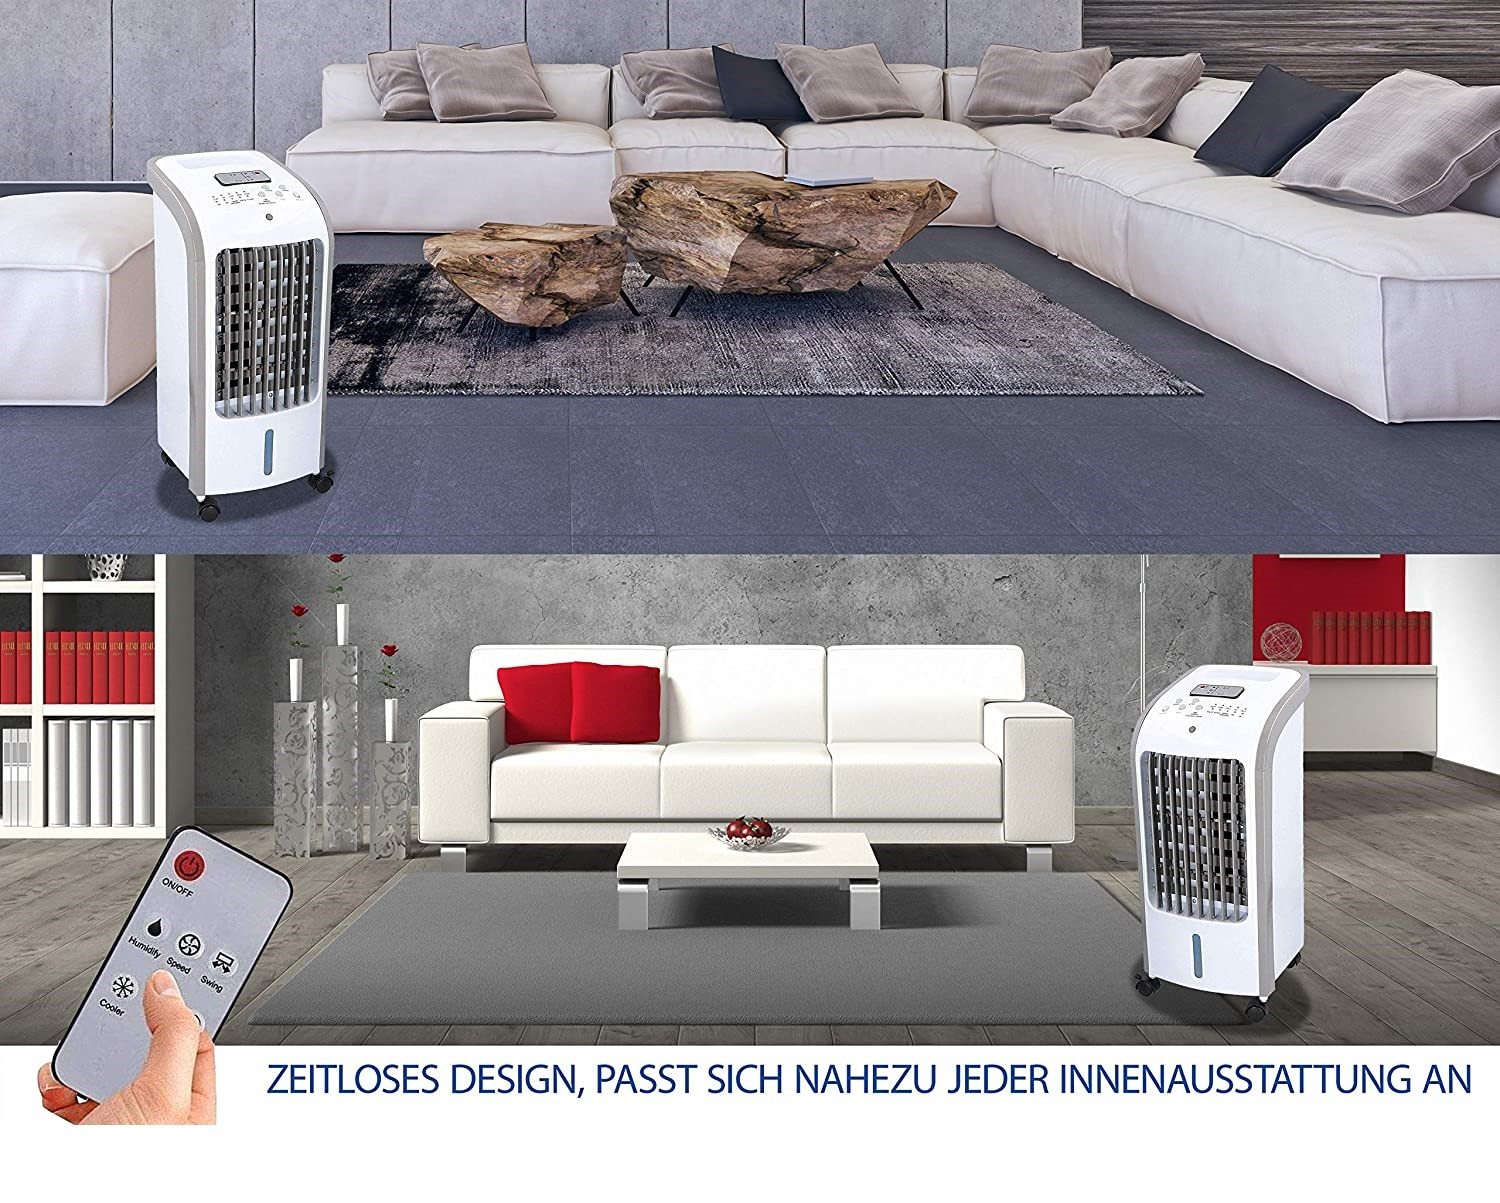 JUNG Lifetime Aircooler Klimagerät mit (Max. Inkl. 35 EEK: Weiß Timer Wasserkühlung, Fernbedienung A+) m², Raumgröße: 